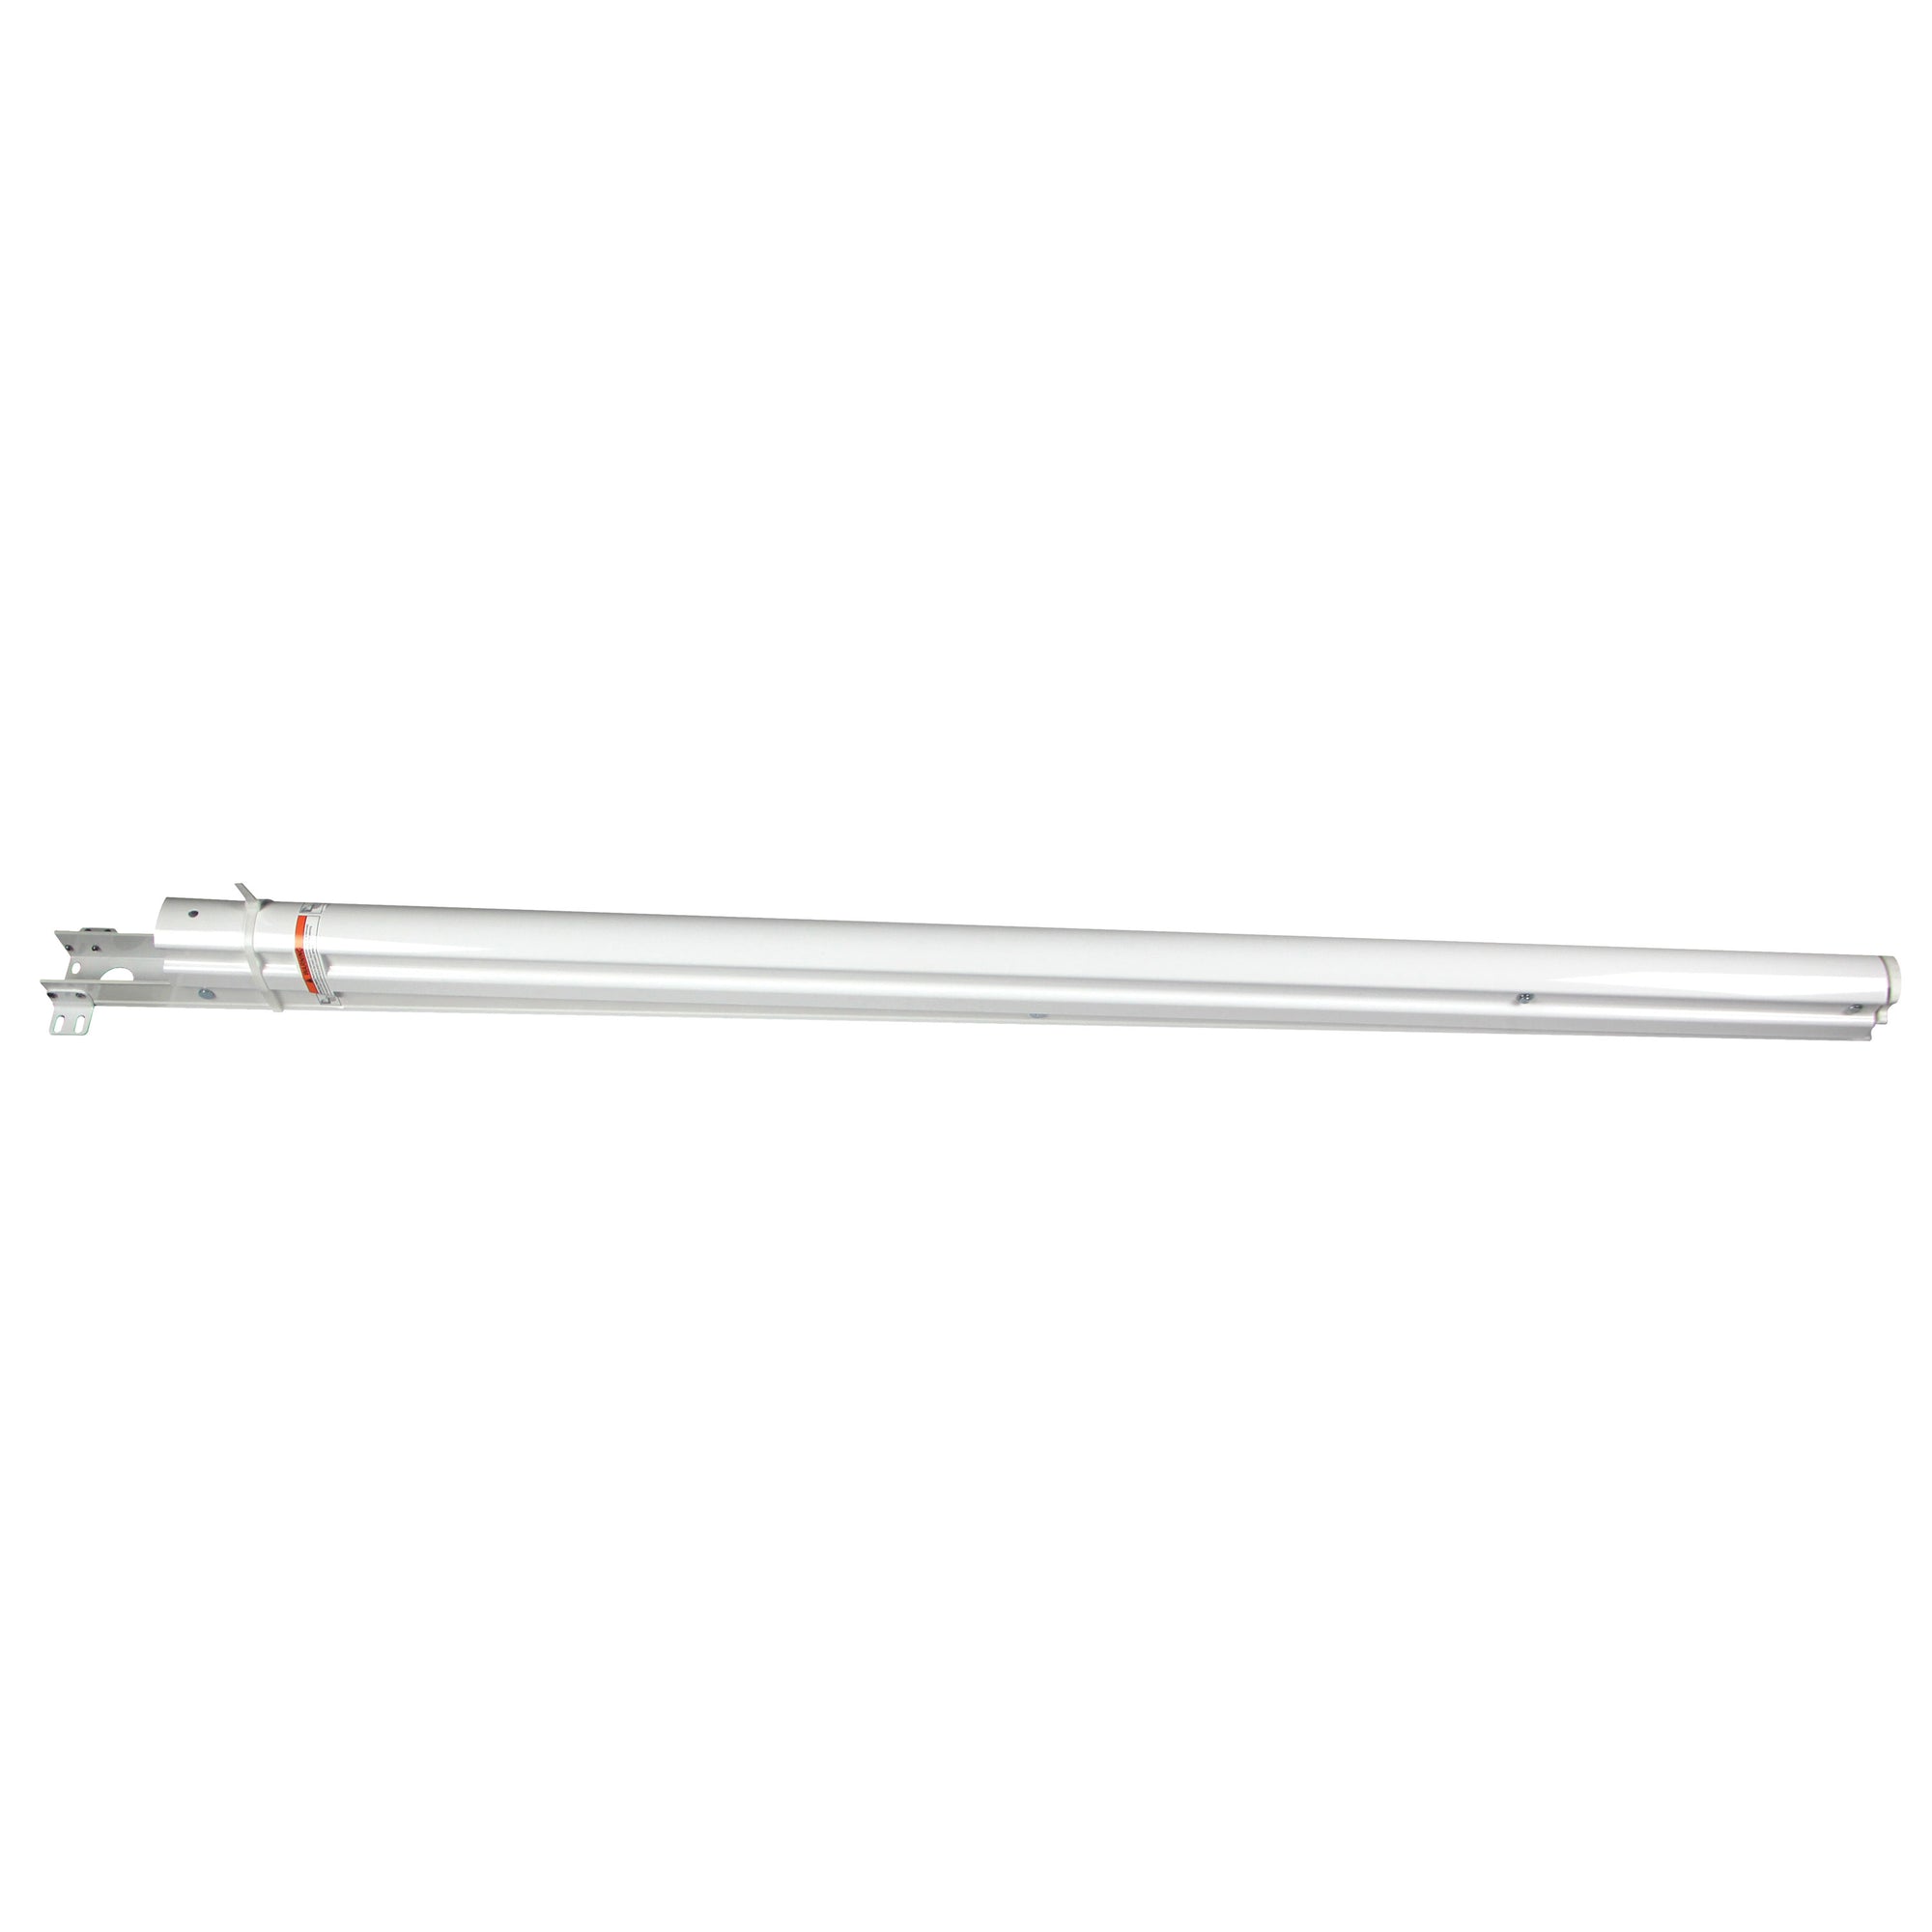 Lippert 281152 Solera Standard Awning Support Arm - 69", White